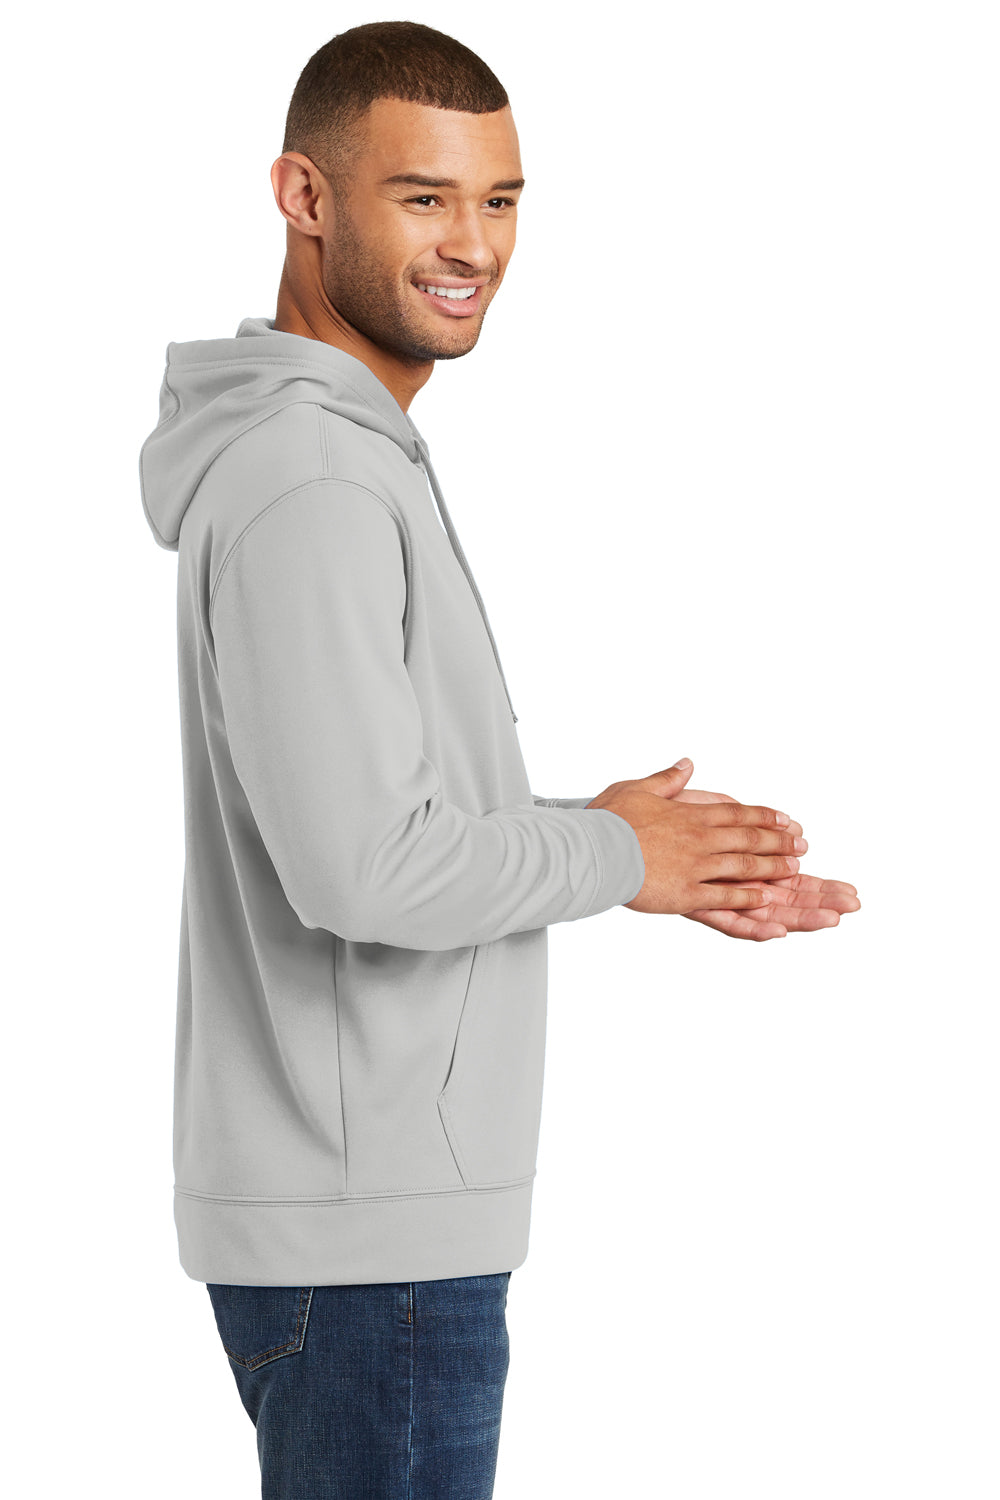 Port & Company PC590H Mens Dry Zone Performance Moisture Wicking Fleece Hooded Sweatshirt Hoodie Silver Grey Side